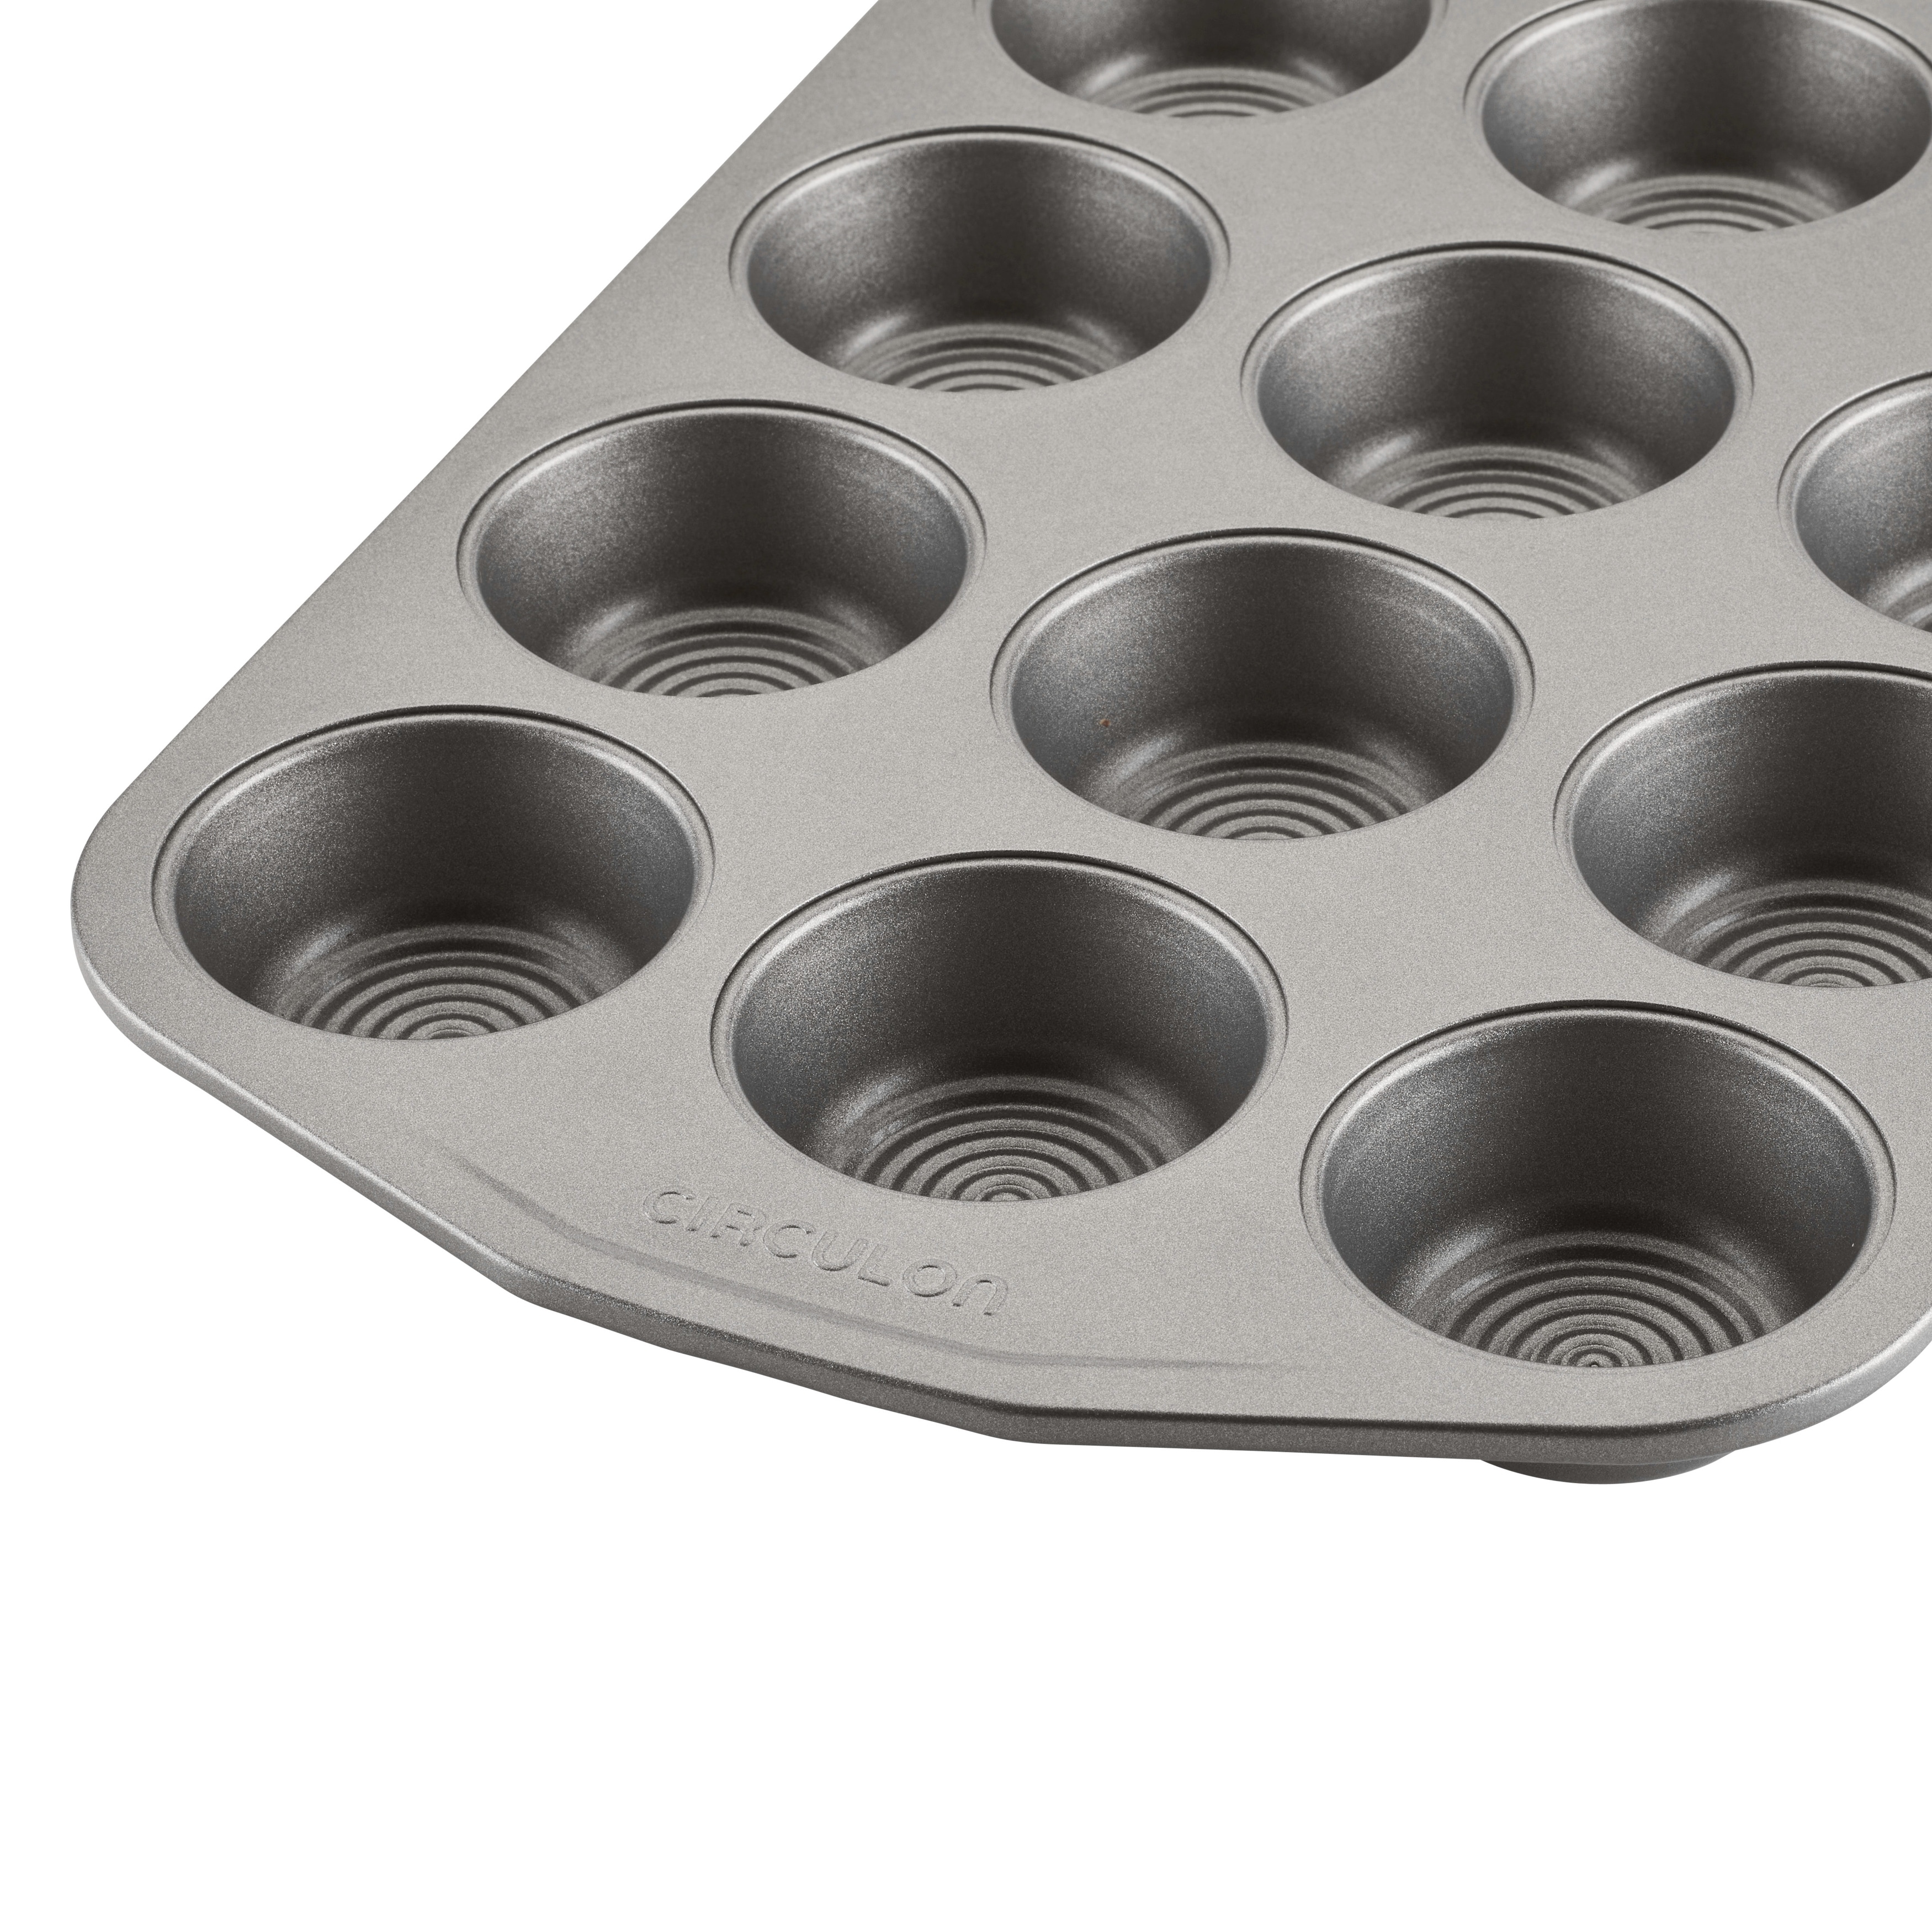 Farberware Nonstick Bakeware 12-Cup Muffin Tin / Nonstick 12-Cup Cupcake Tin  - 12 Cup, Gray 